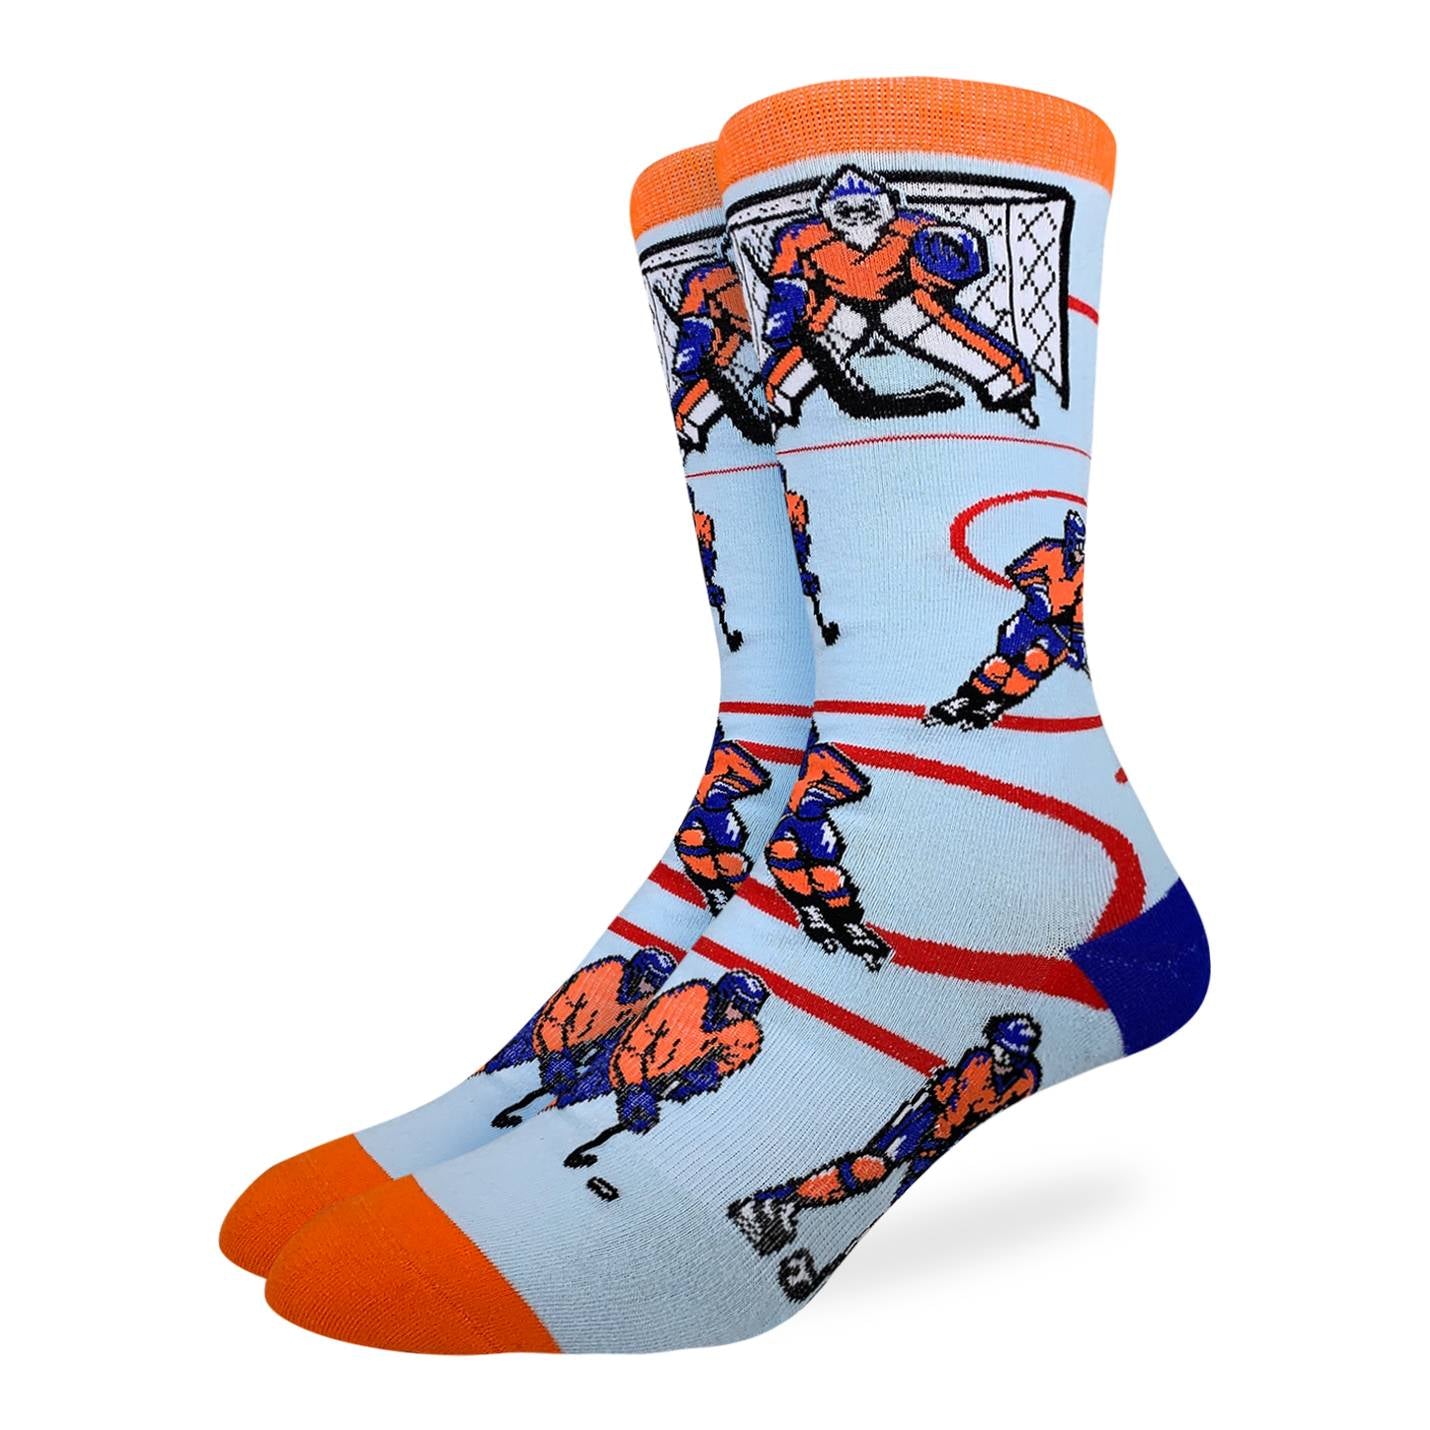 Men's Orange & Blue Hockey Crew Socks